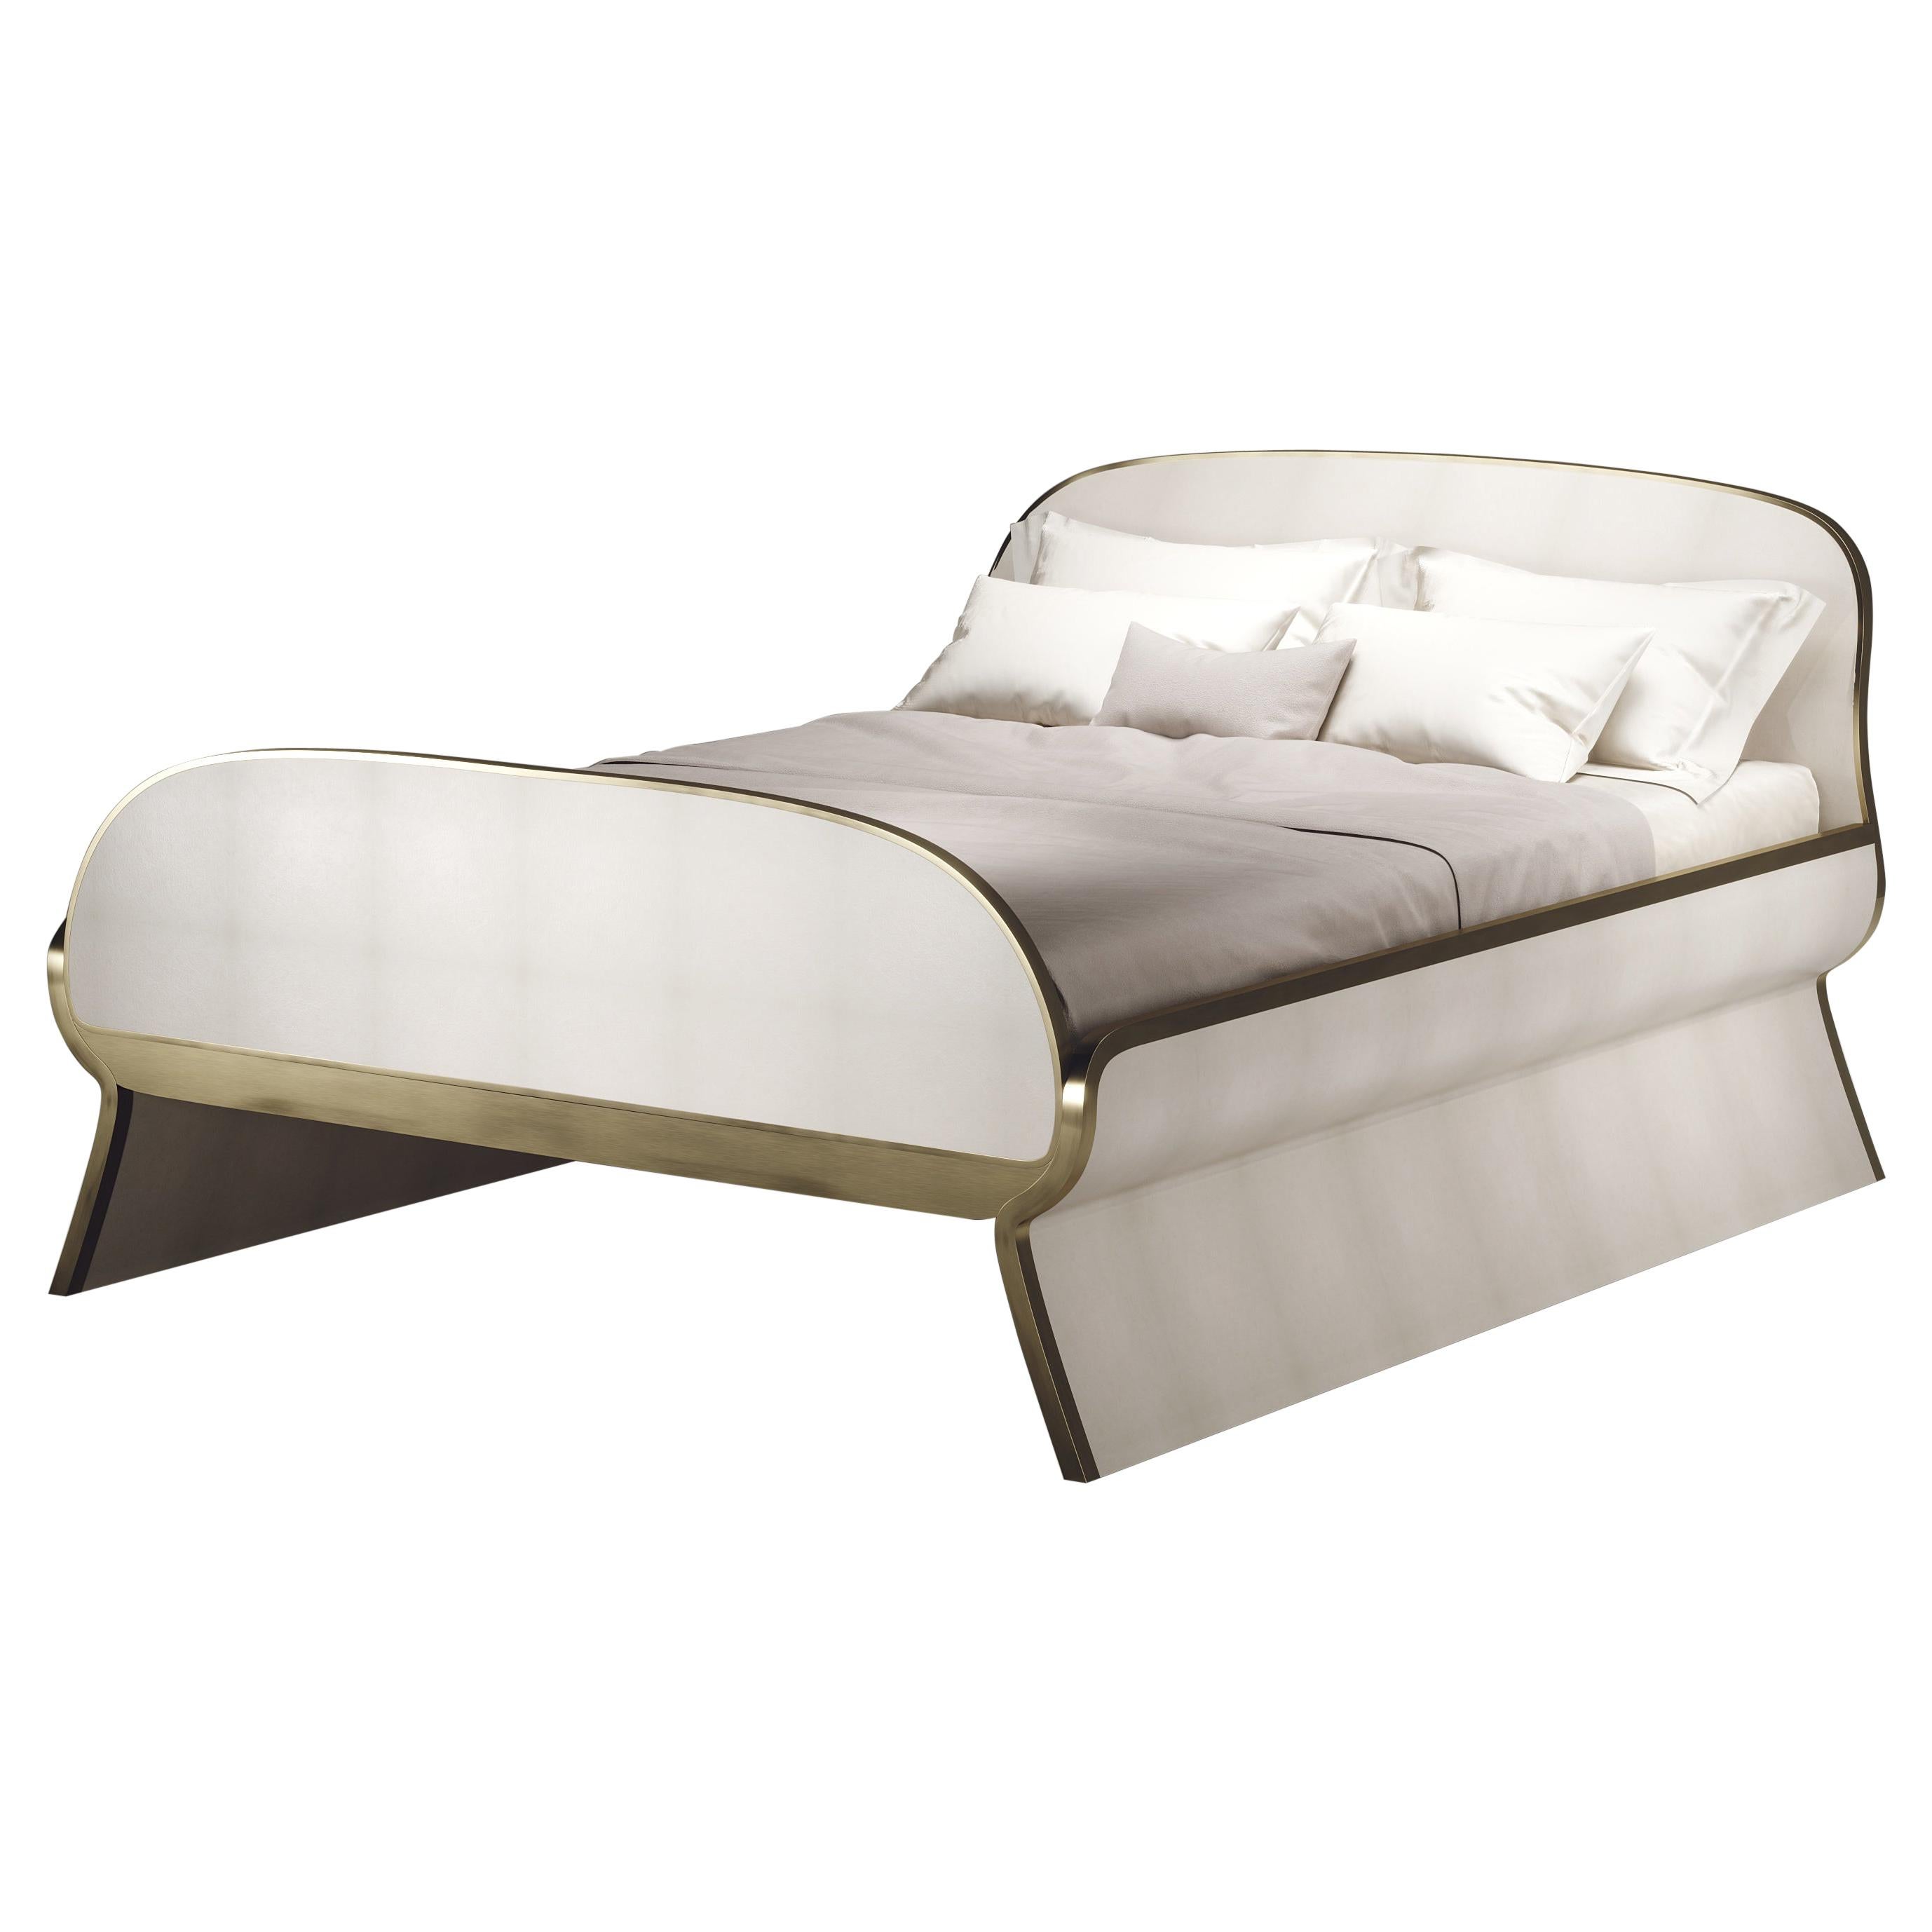 Sleep Like Royalty: Indulge in the Elegance of a Luxurious Platform Bed Frame  